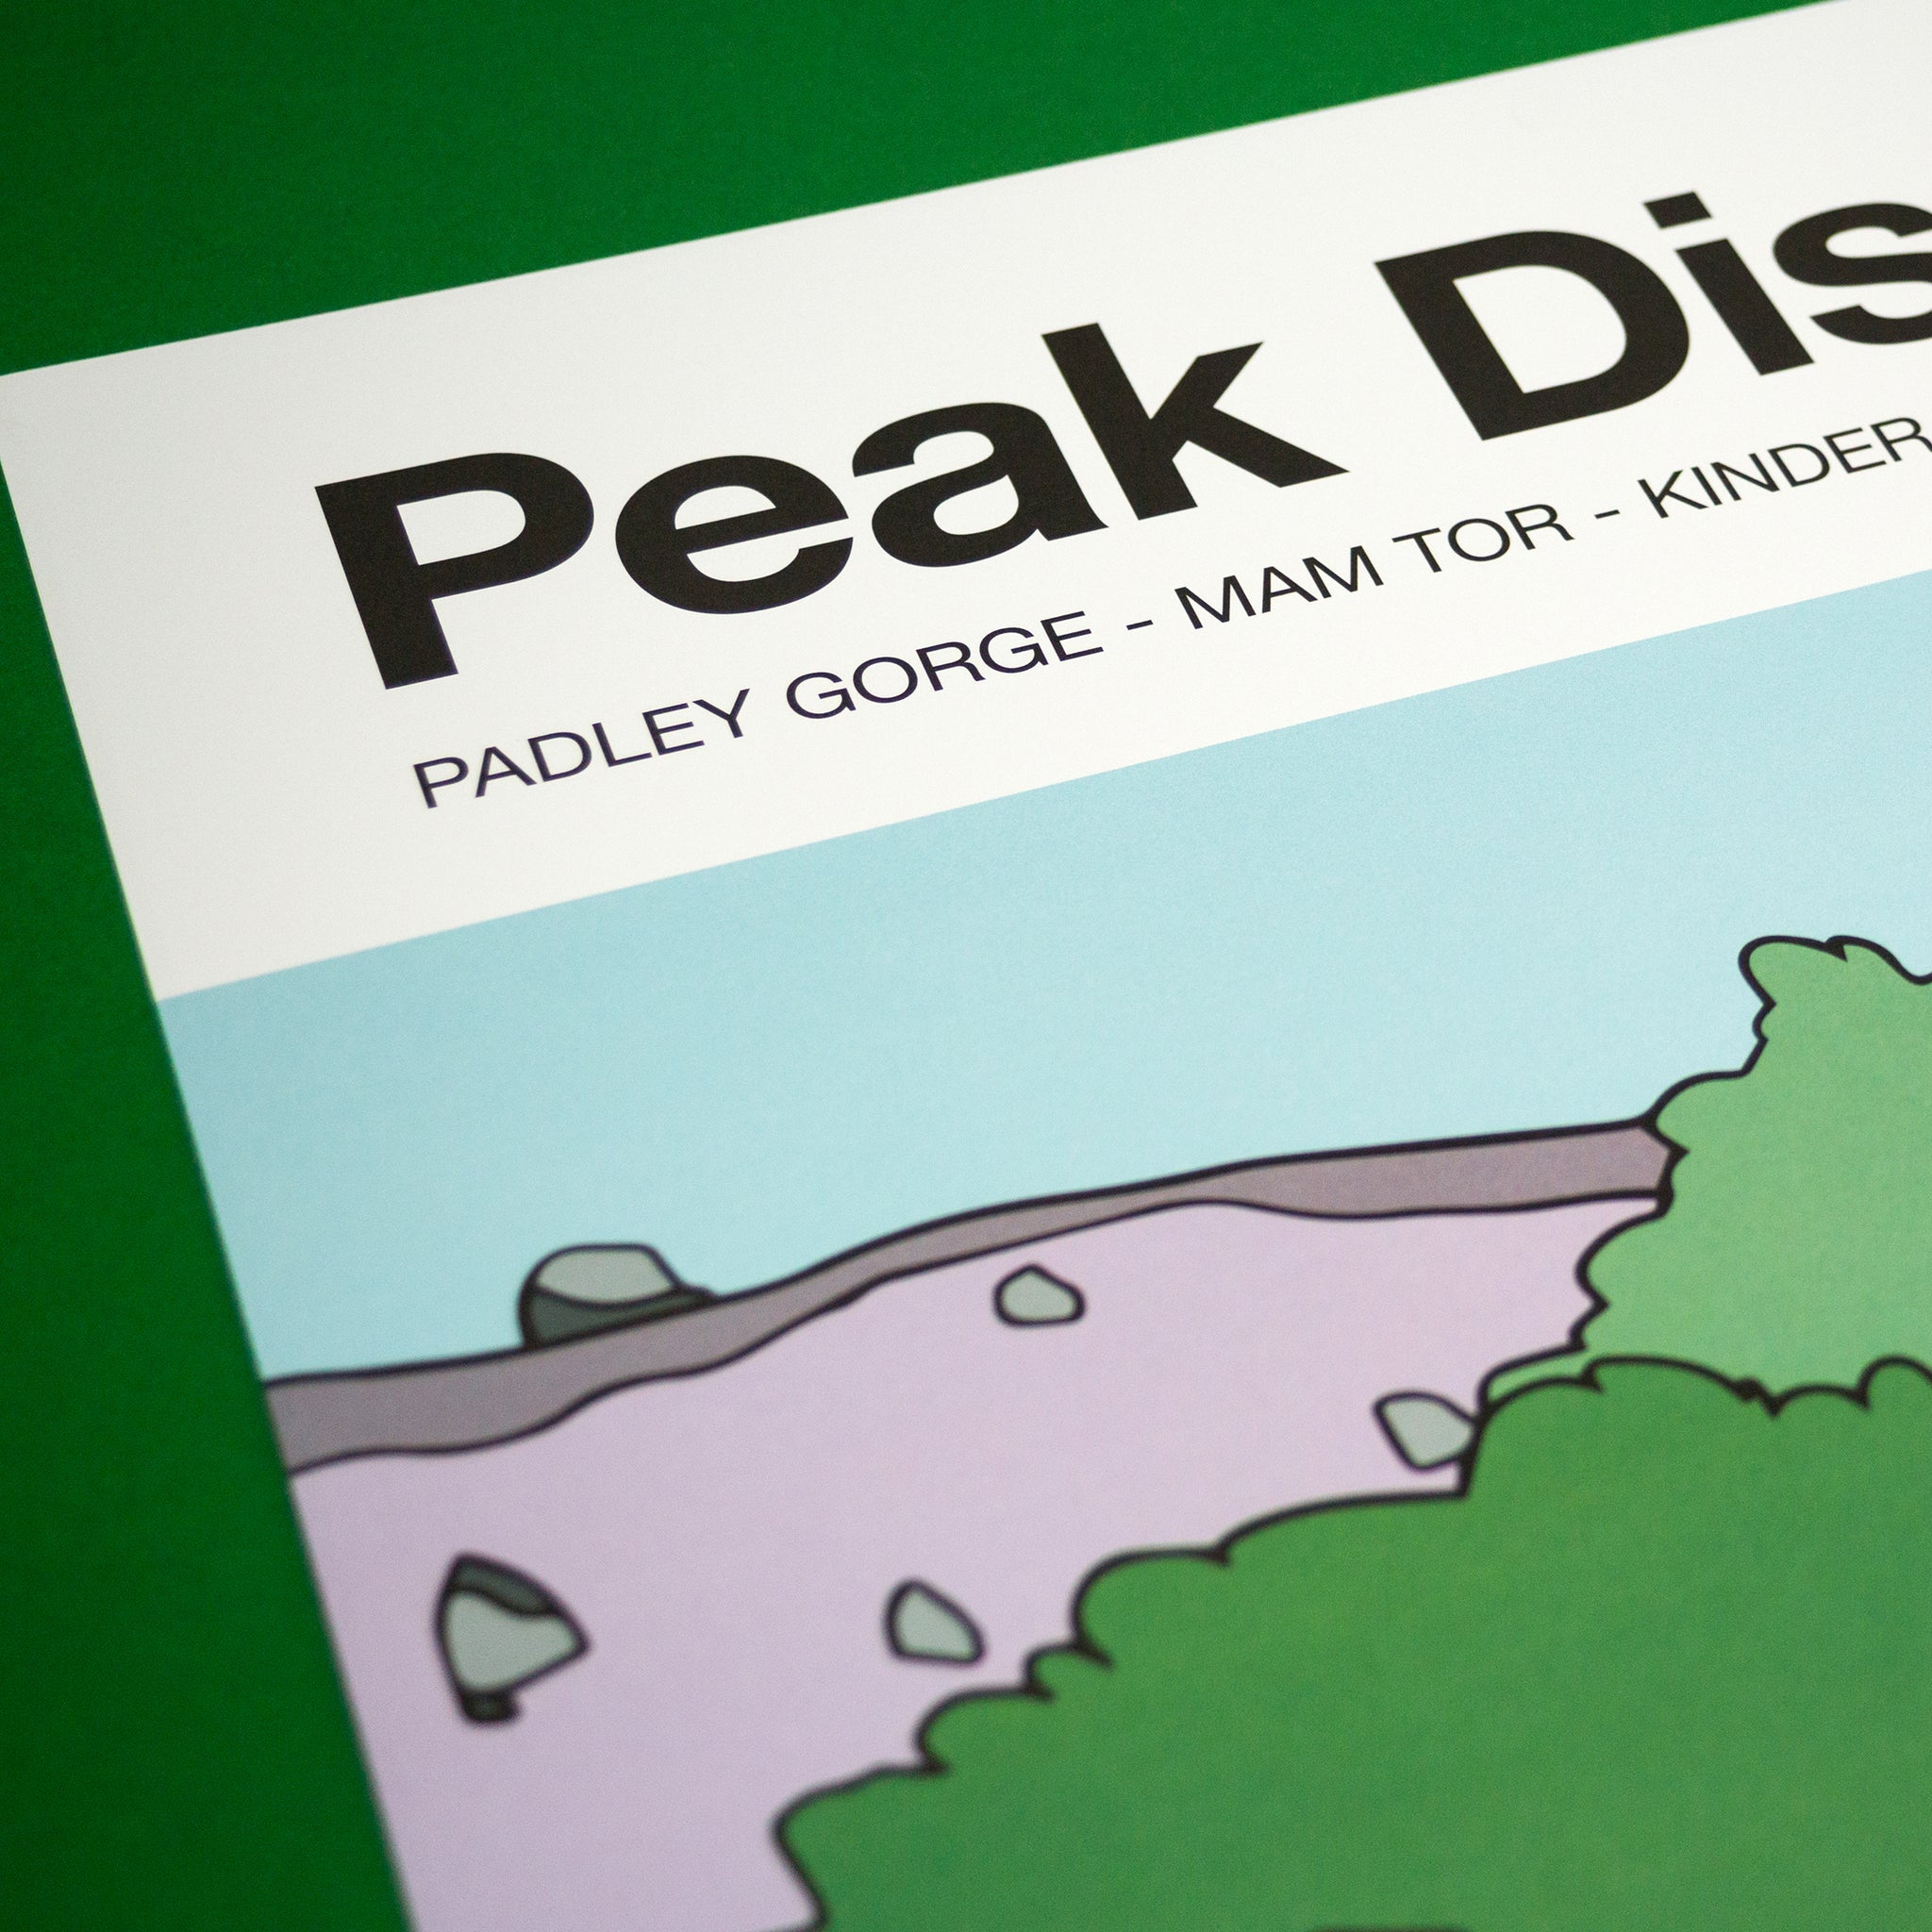 National Parks - Peak District